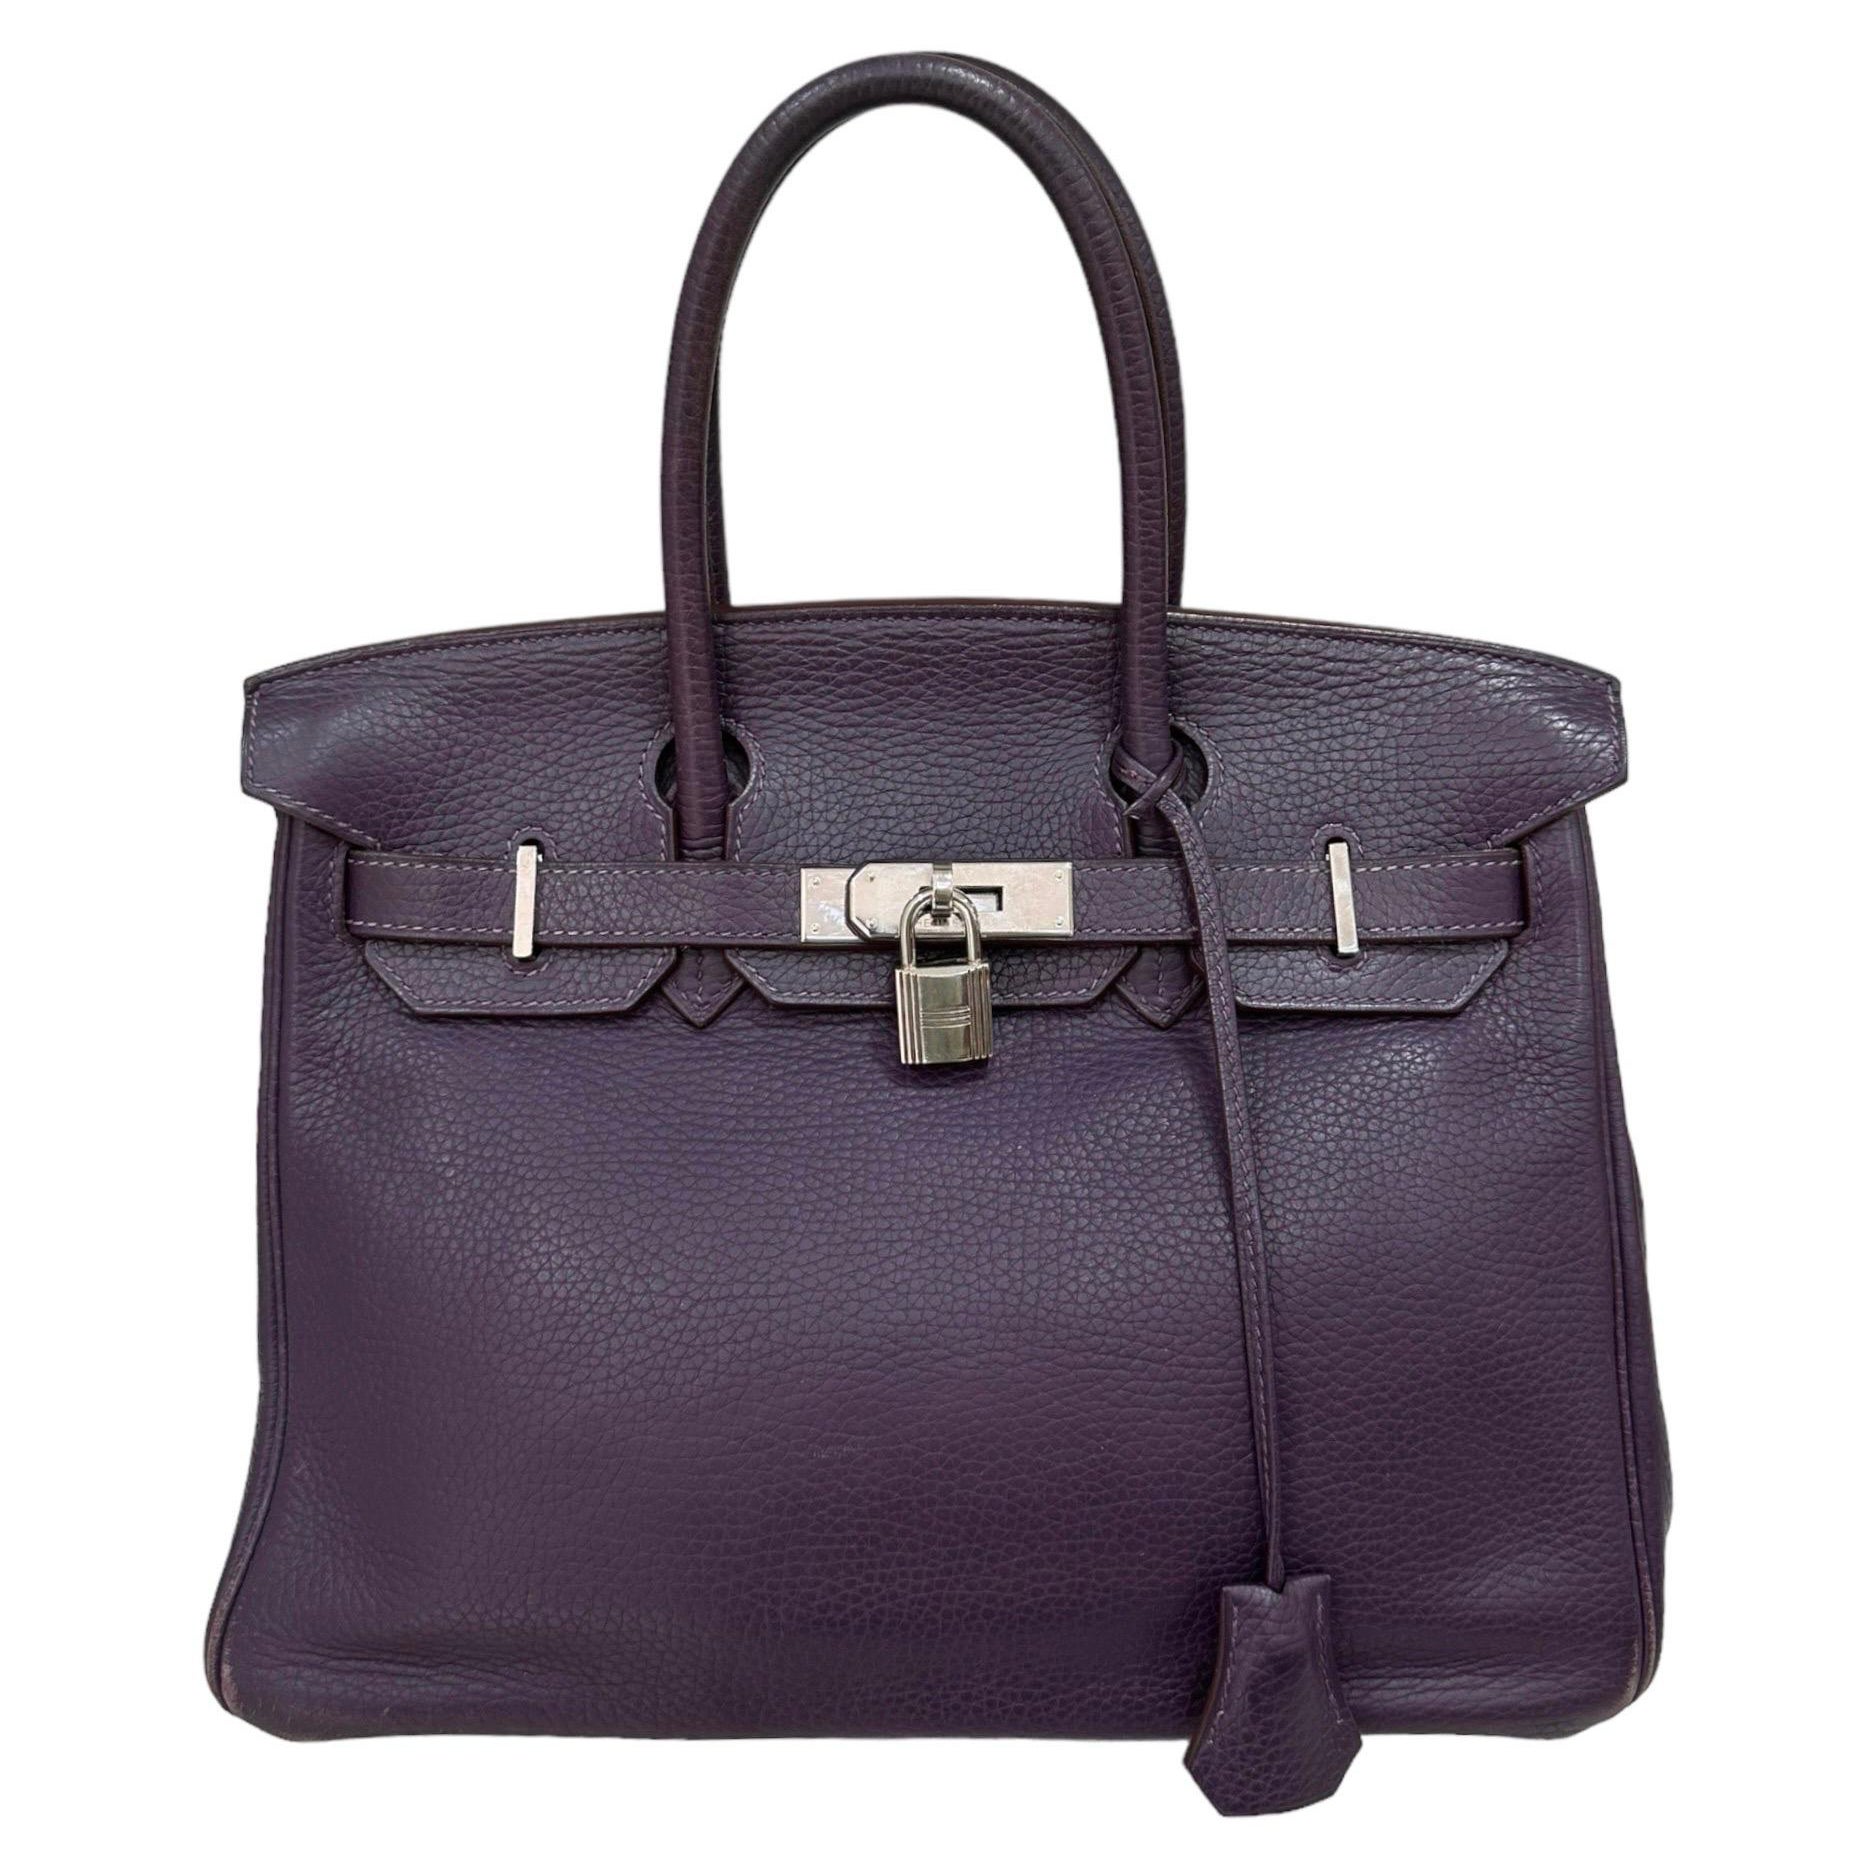 2007 Hermès Birkin 30 Courchevel Leather Raisin Top Handle Bag